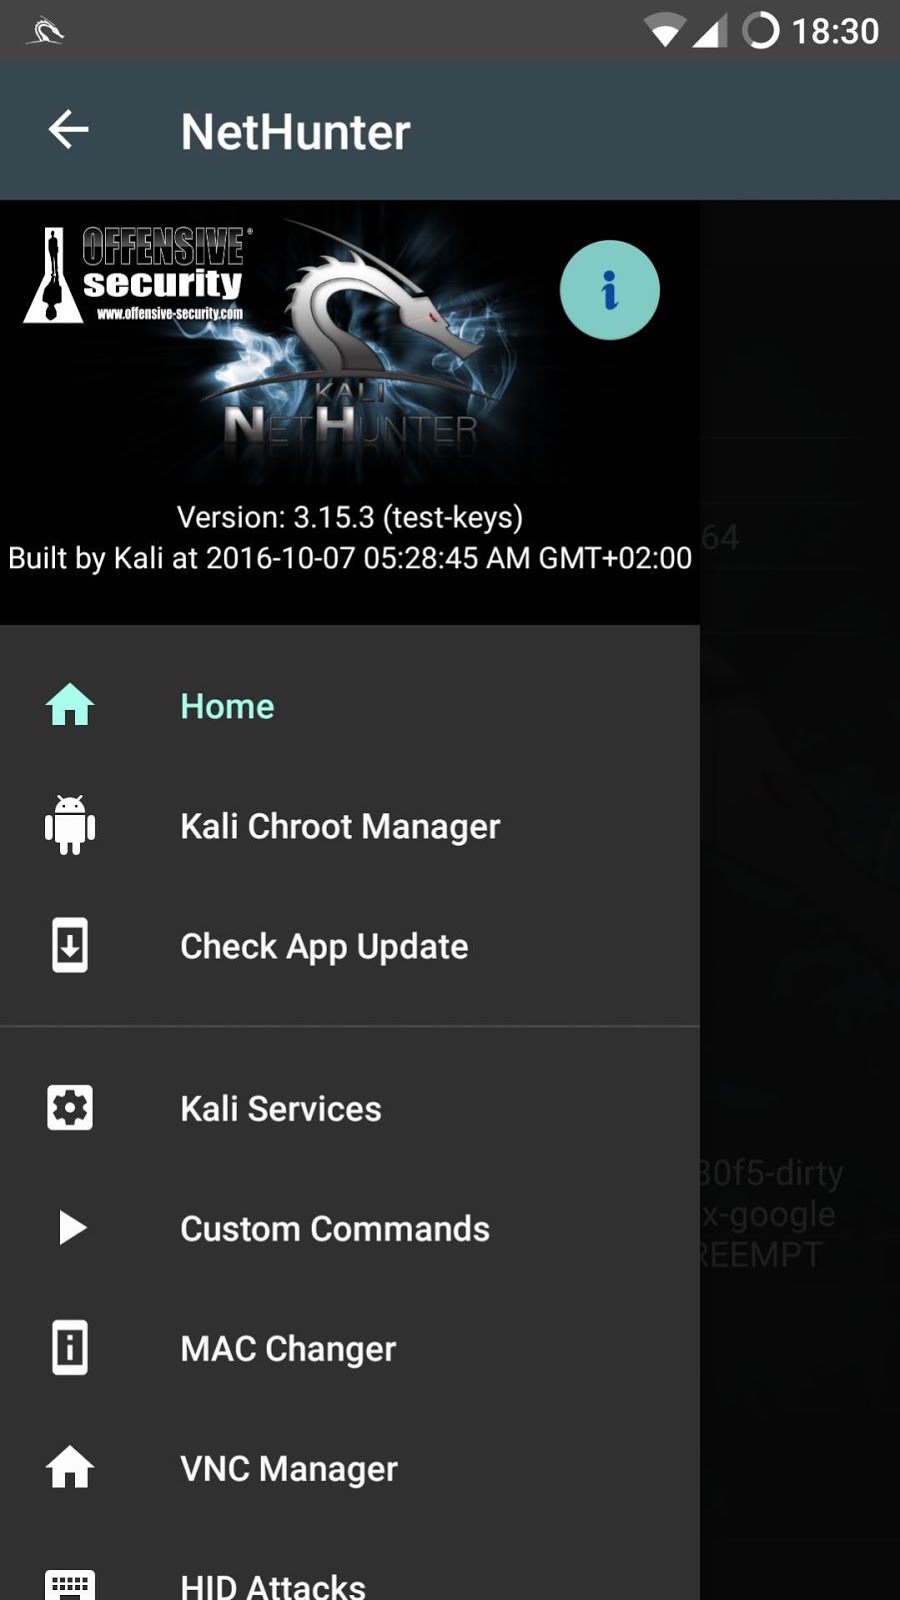 Cara Install Kali Linux NetHunter Di Redmi Note 3 Pro 